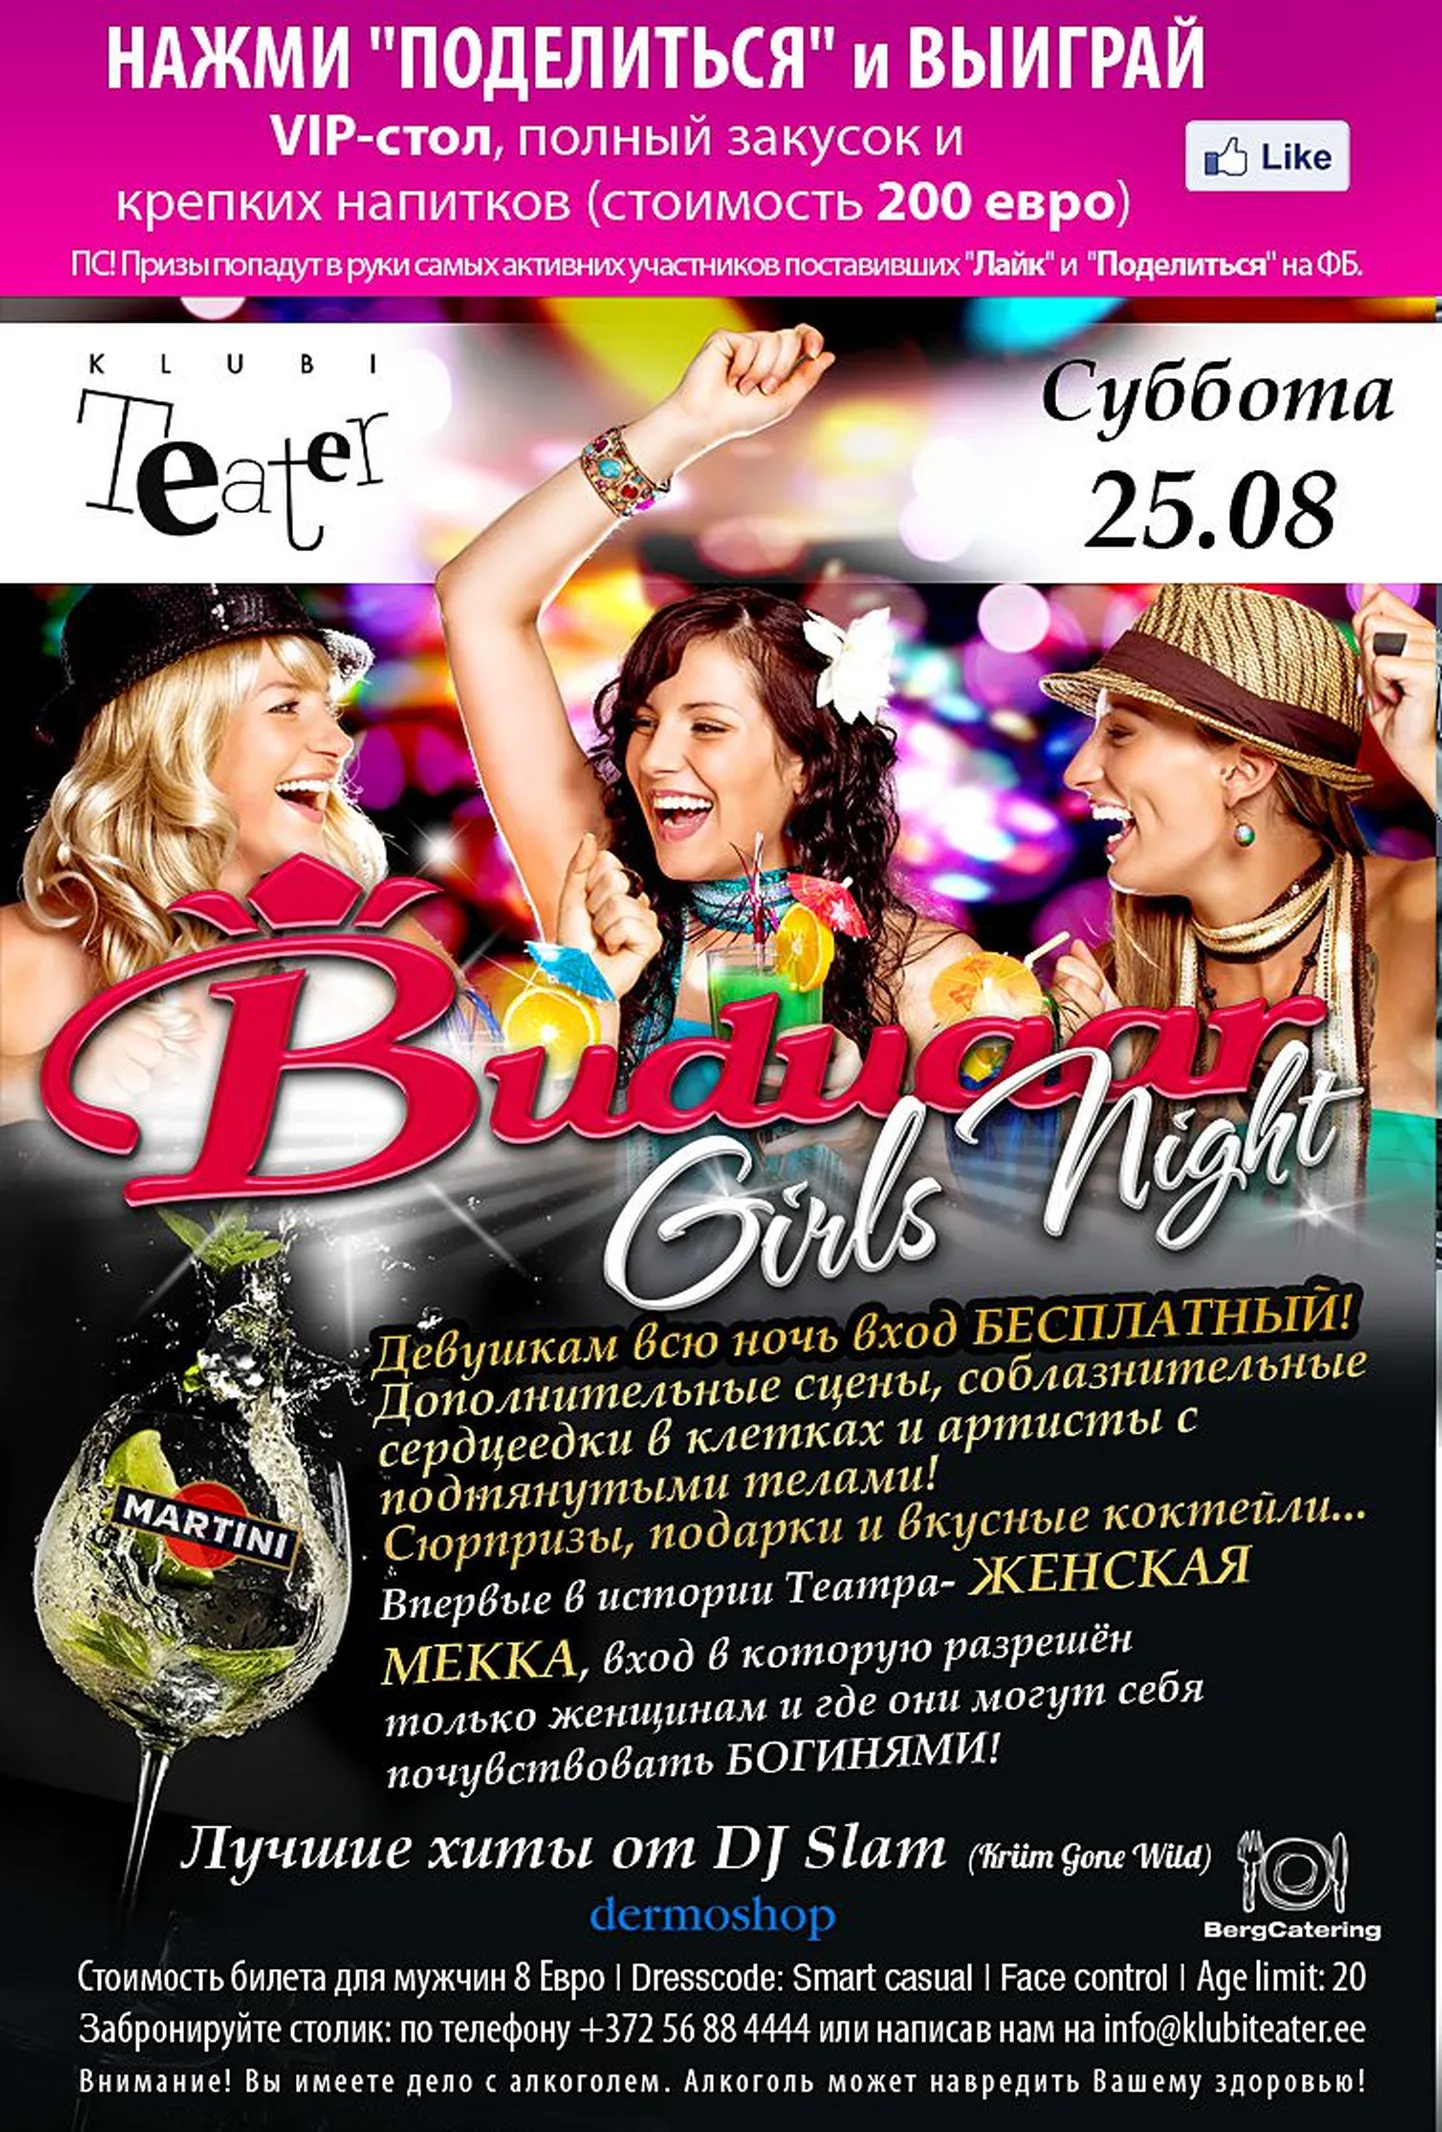 Buduaar Girls Night!